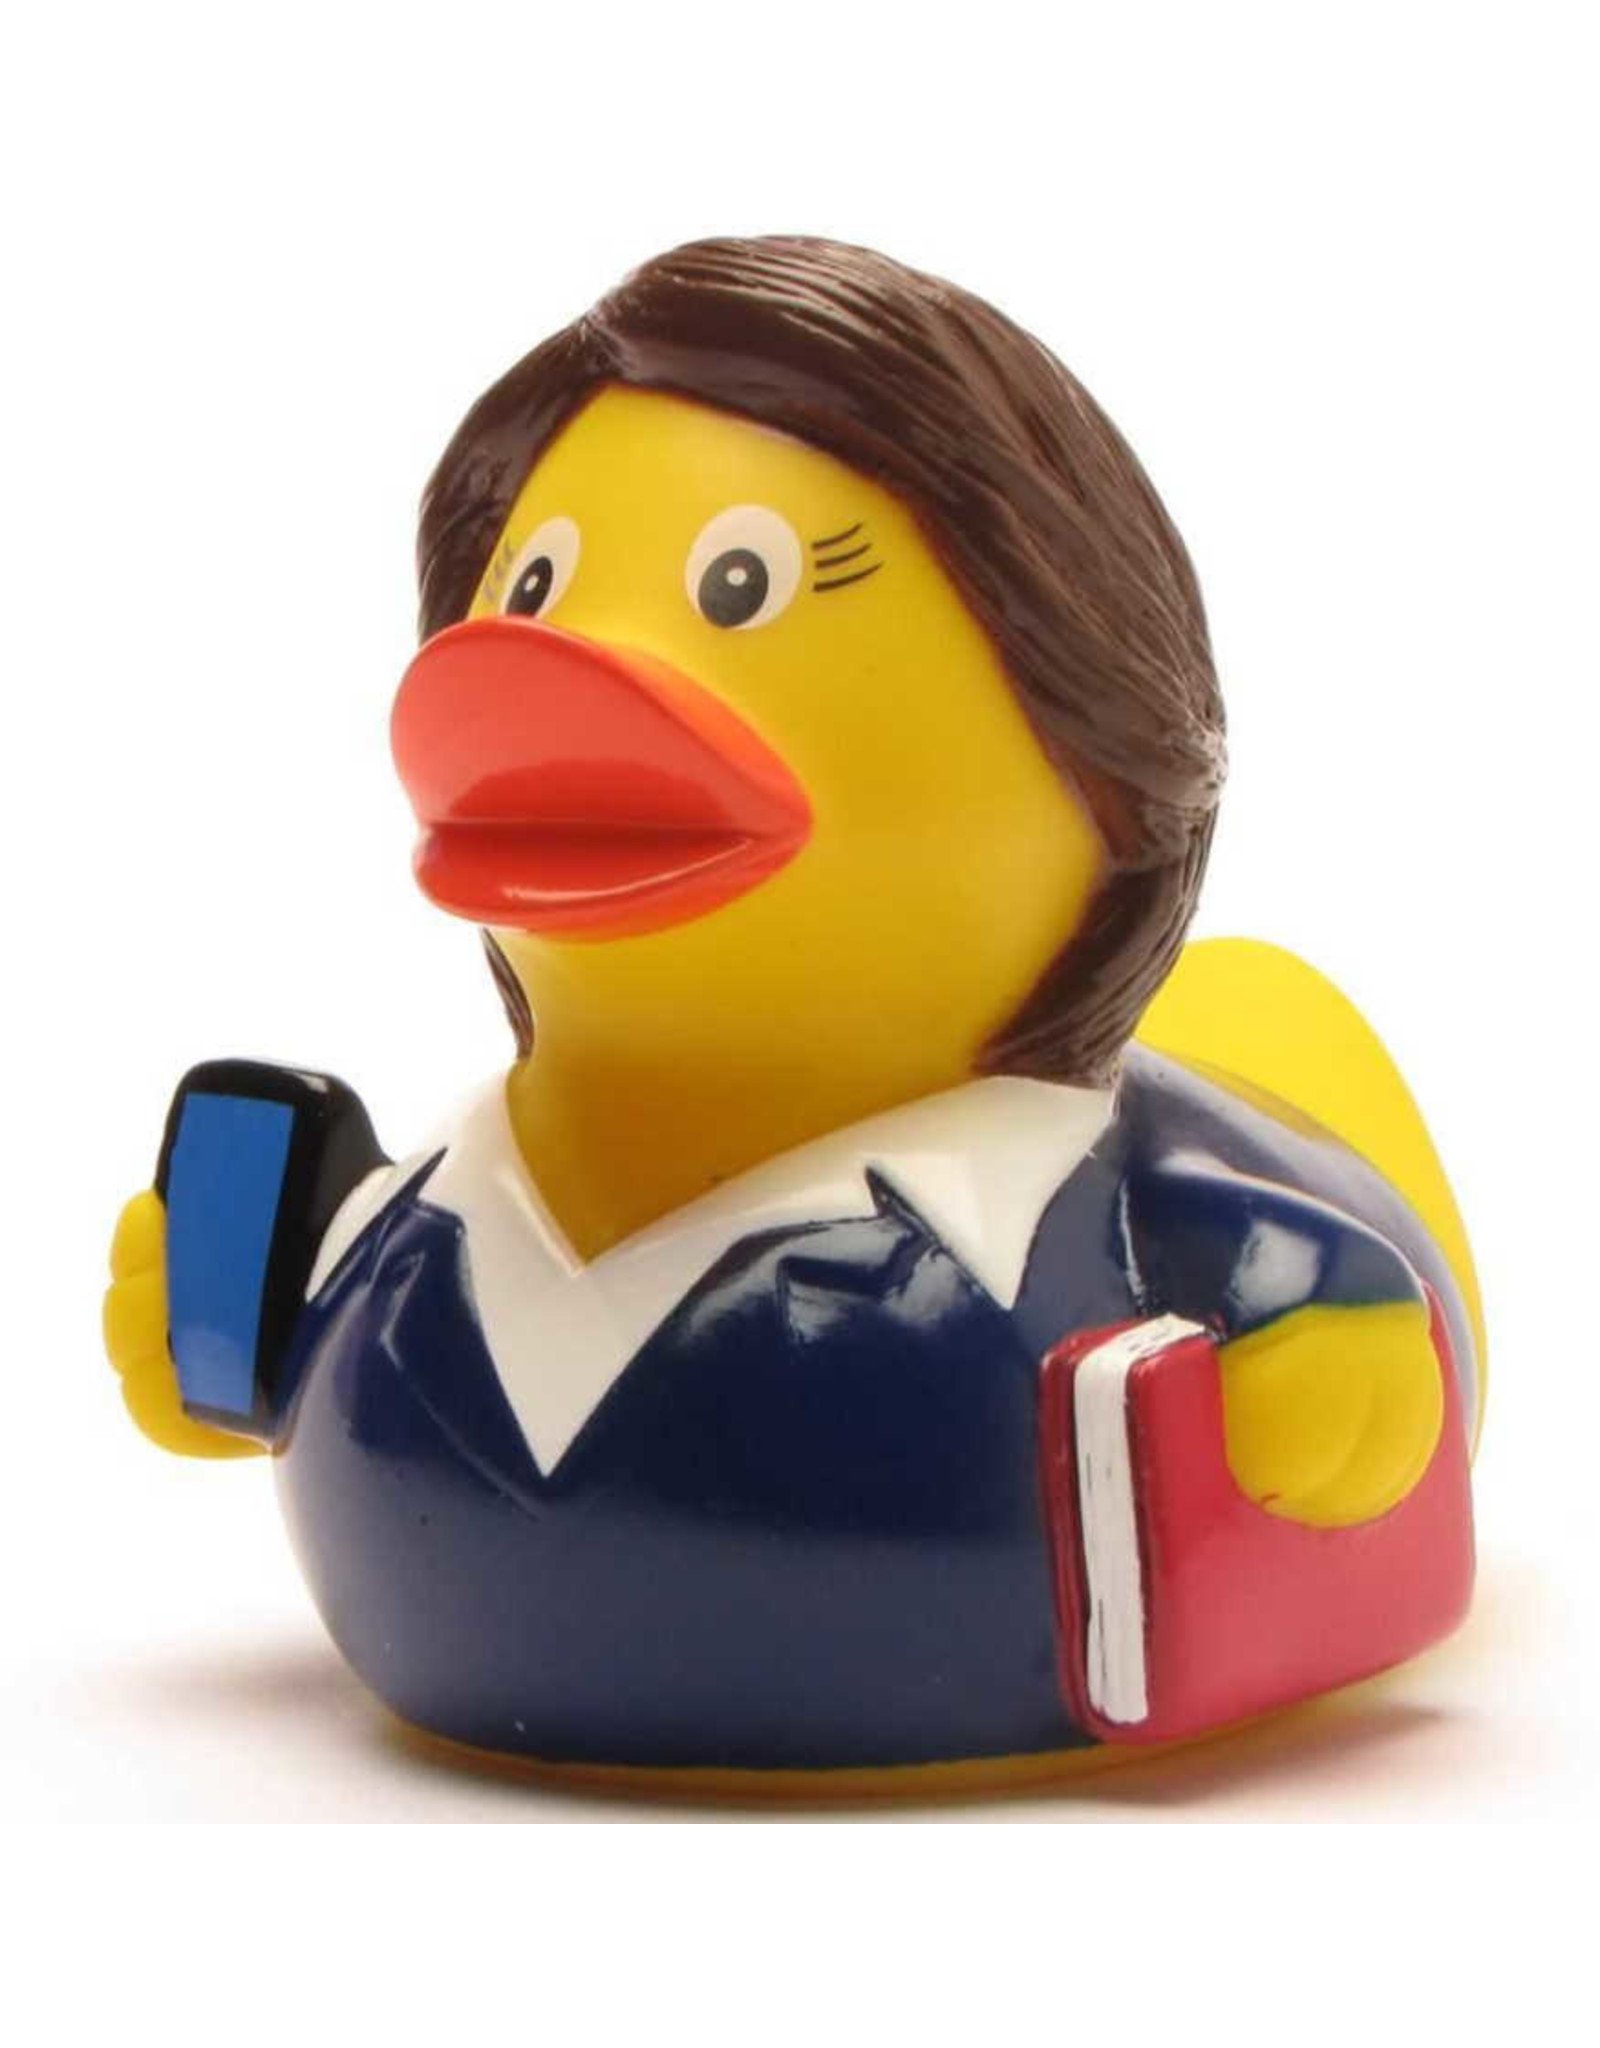 Business Woman Rubber Duck